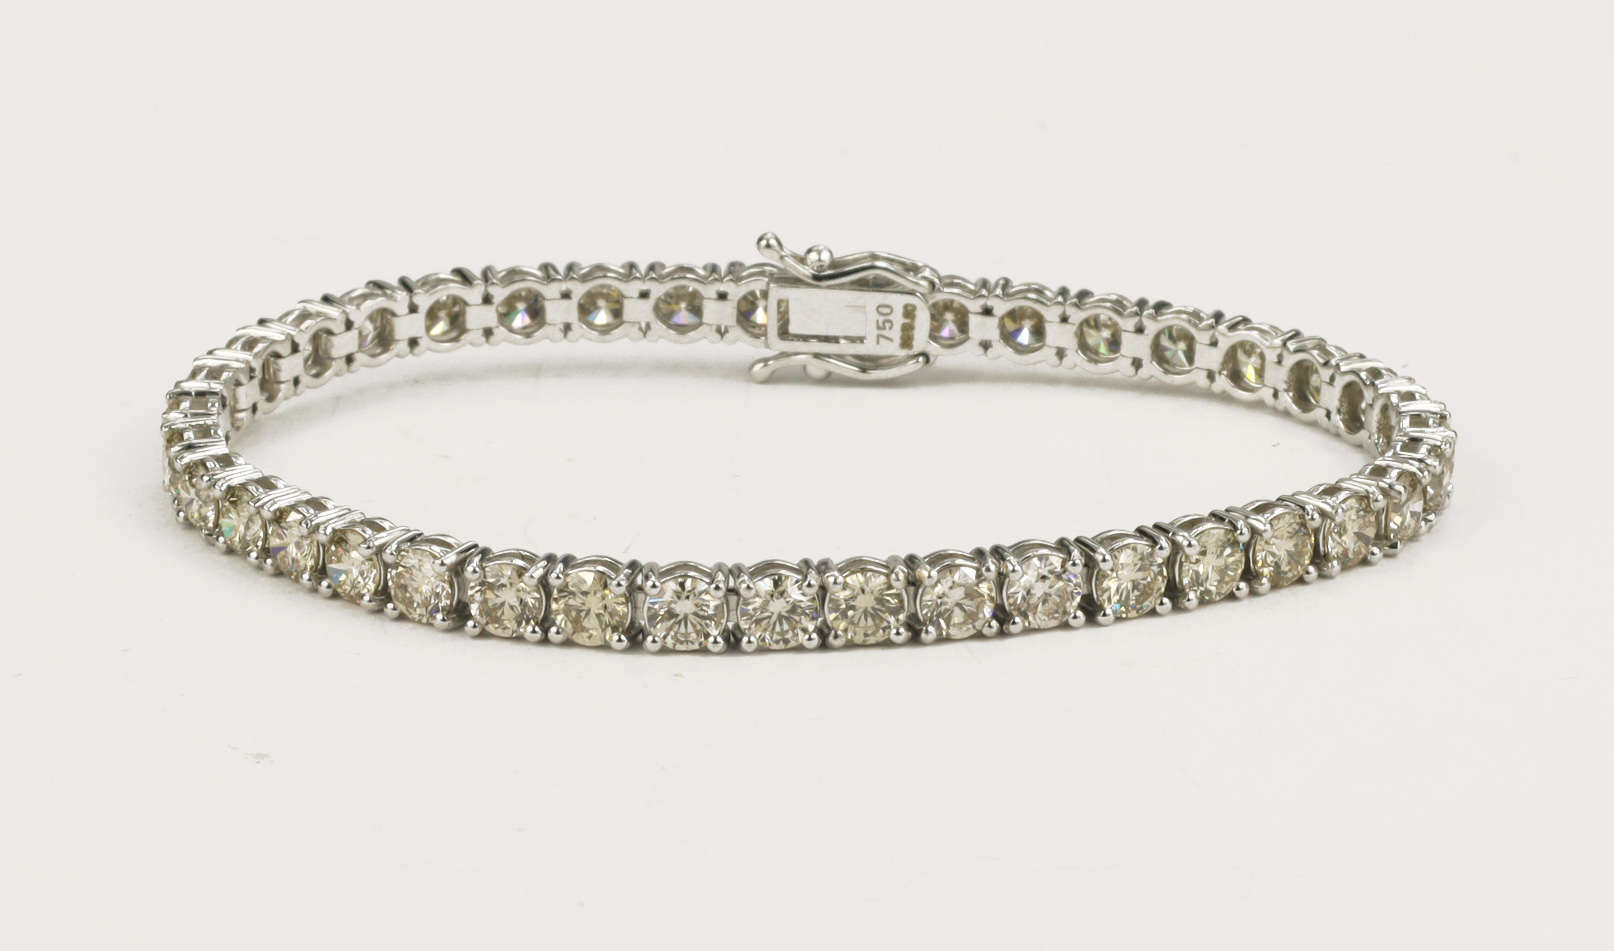 White gold (tests 18ct) diamond tennis bracelet, total diamond weight approx 9ct, thirty-nine